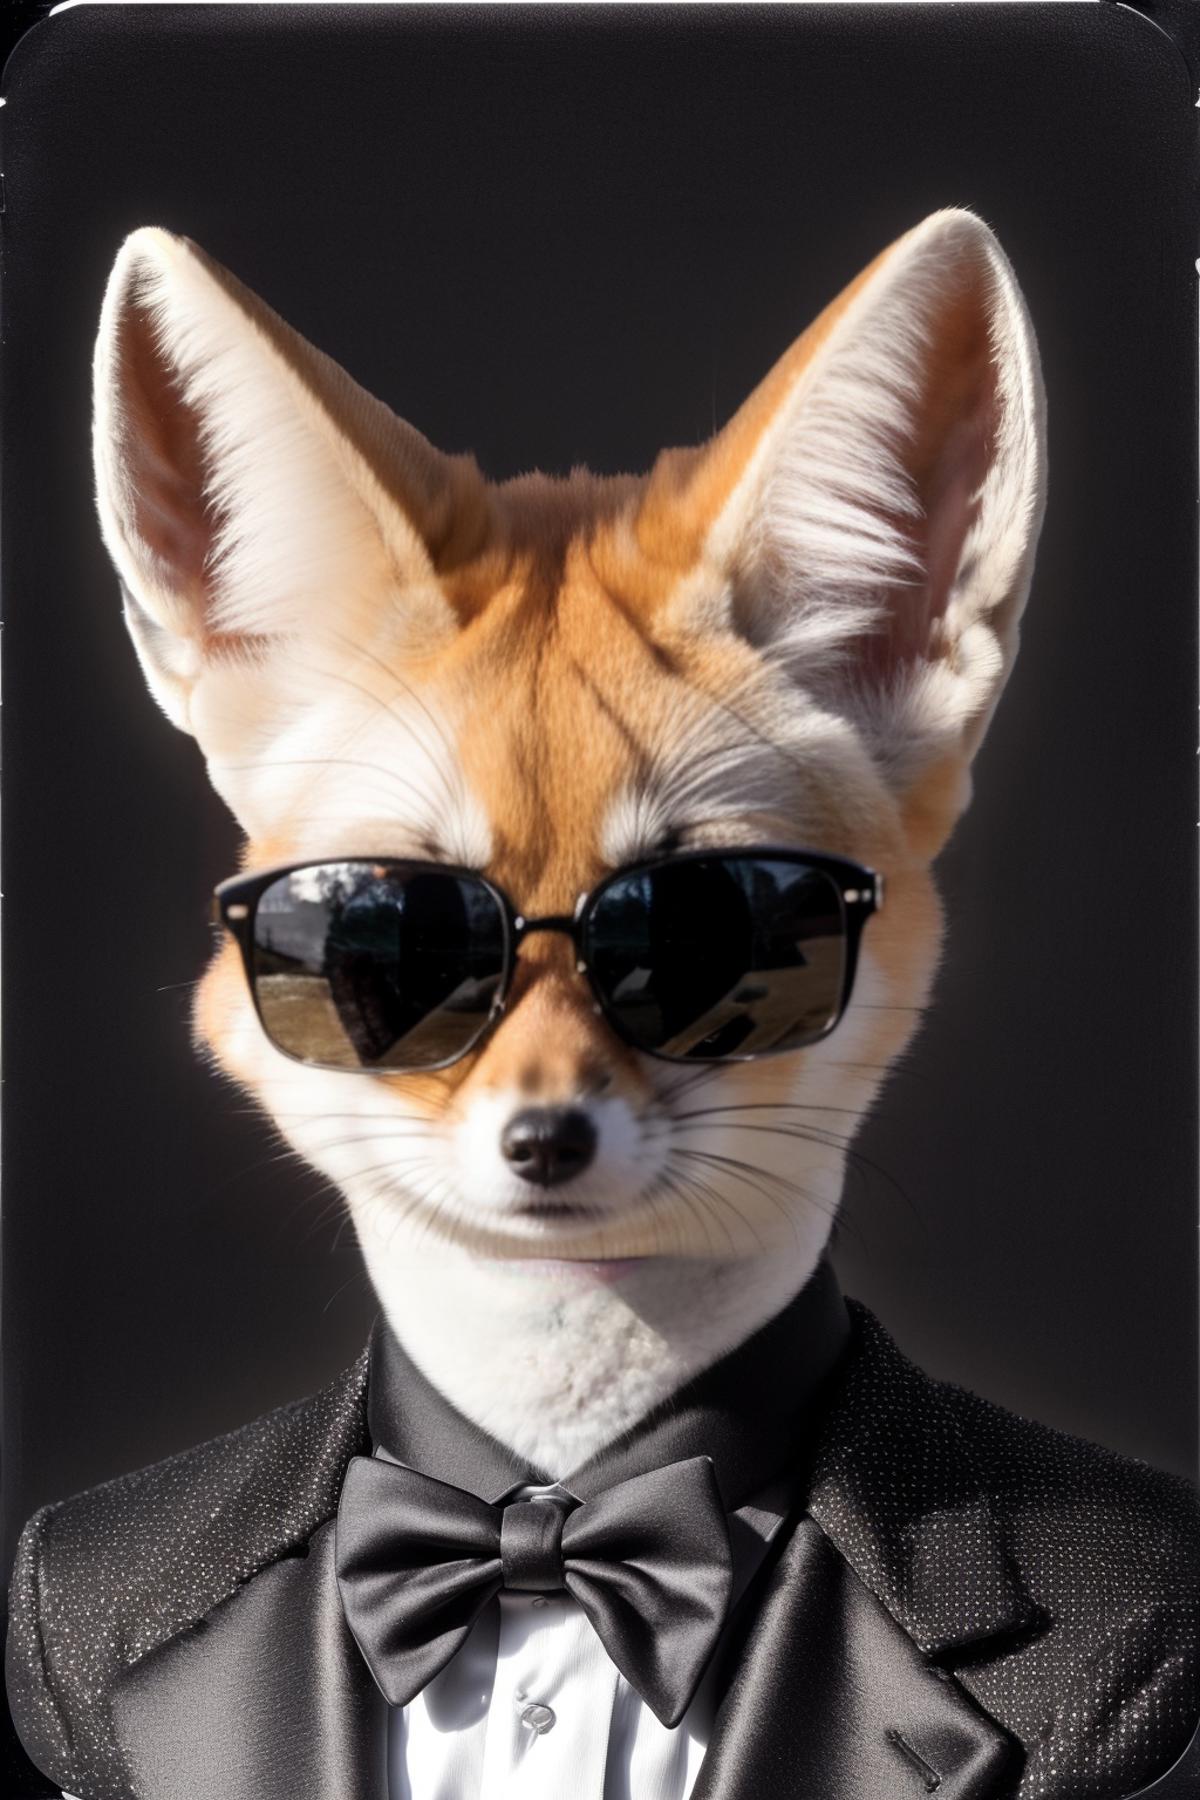 Fennec Fox image by miketuffin